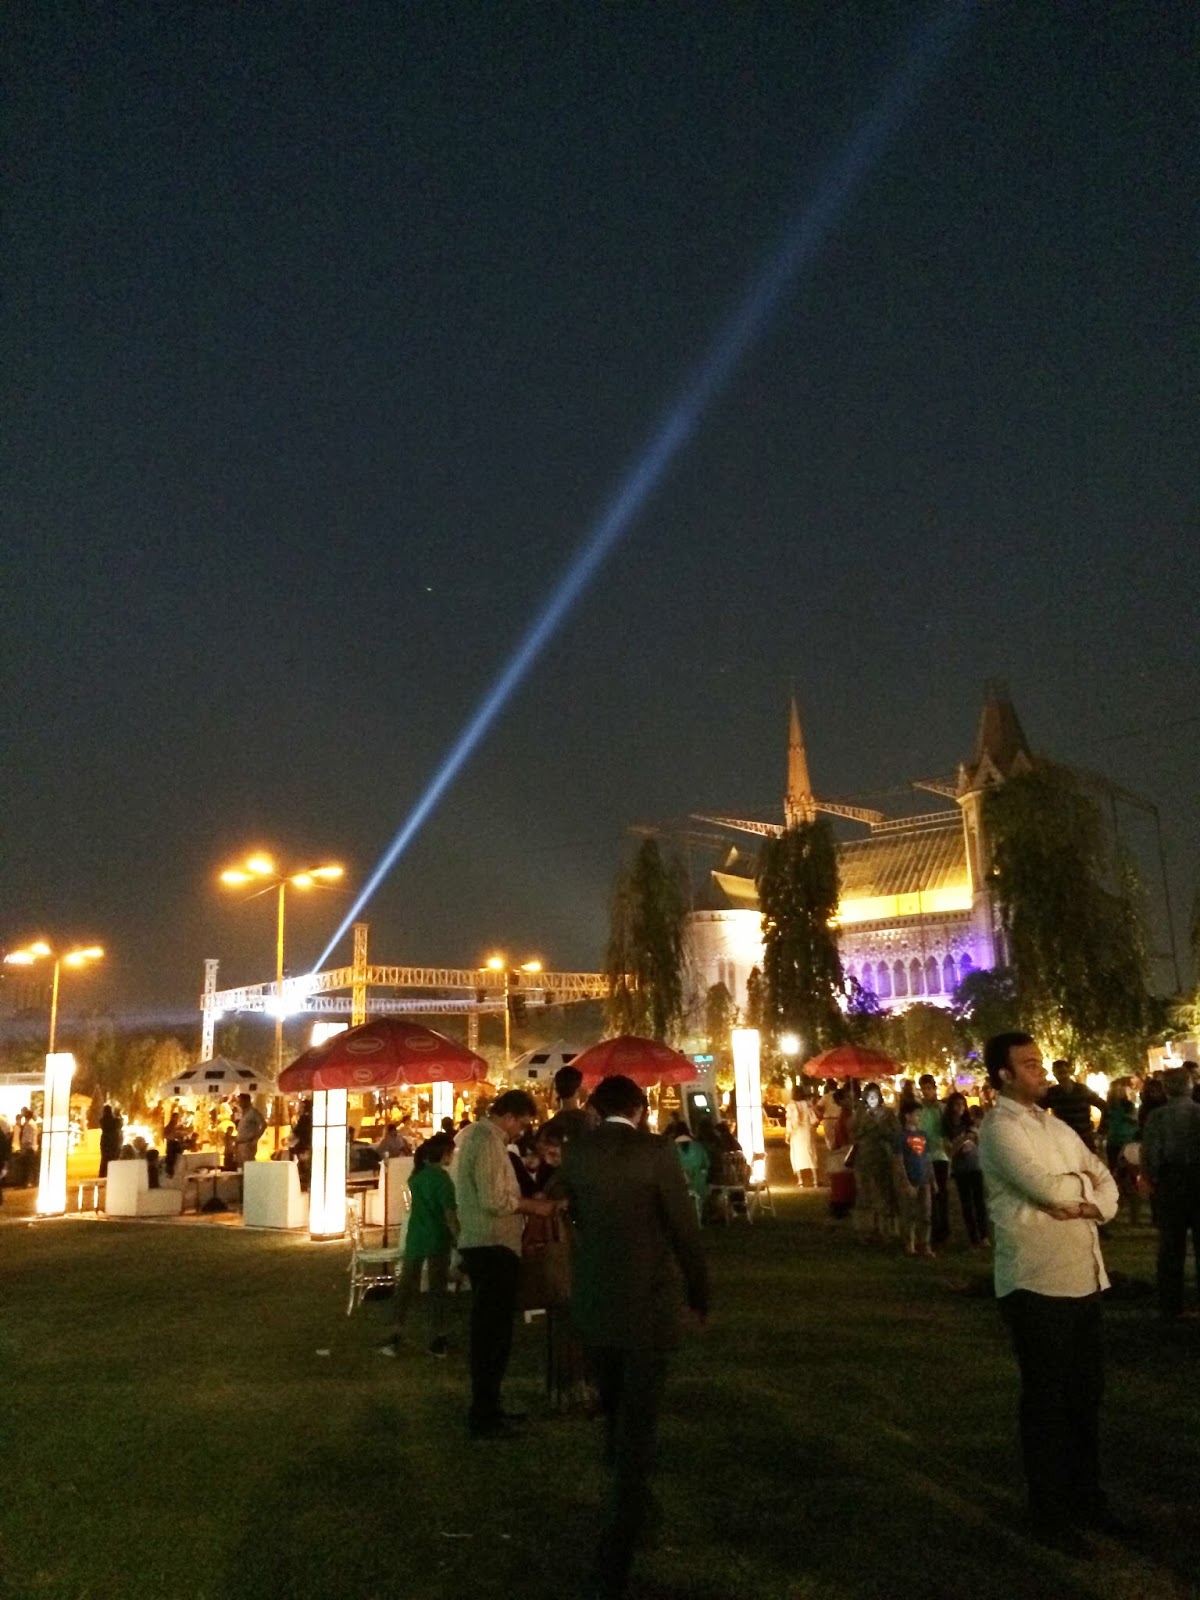 Karachi Eat Food Festival - Frere Hall at night